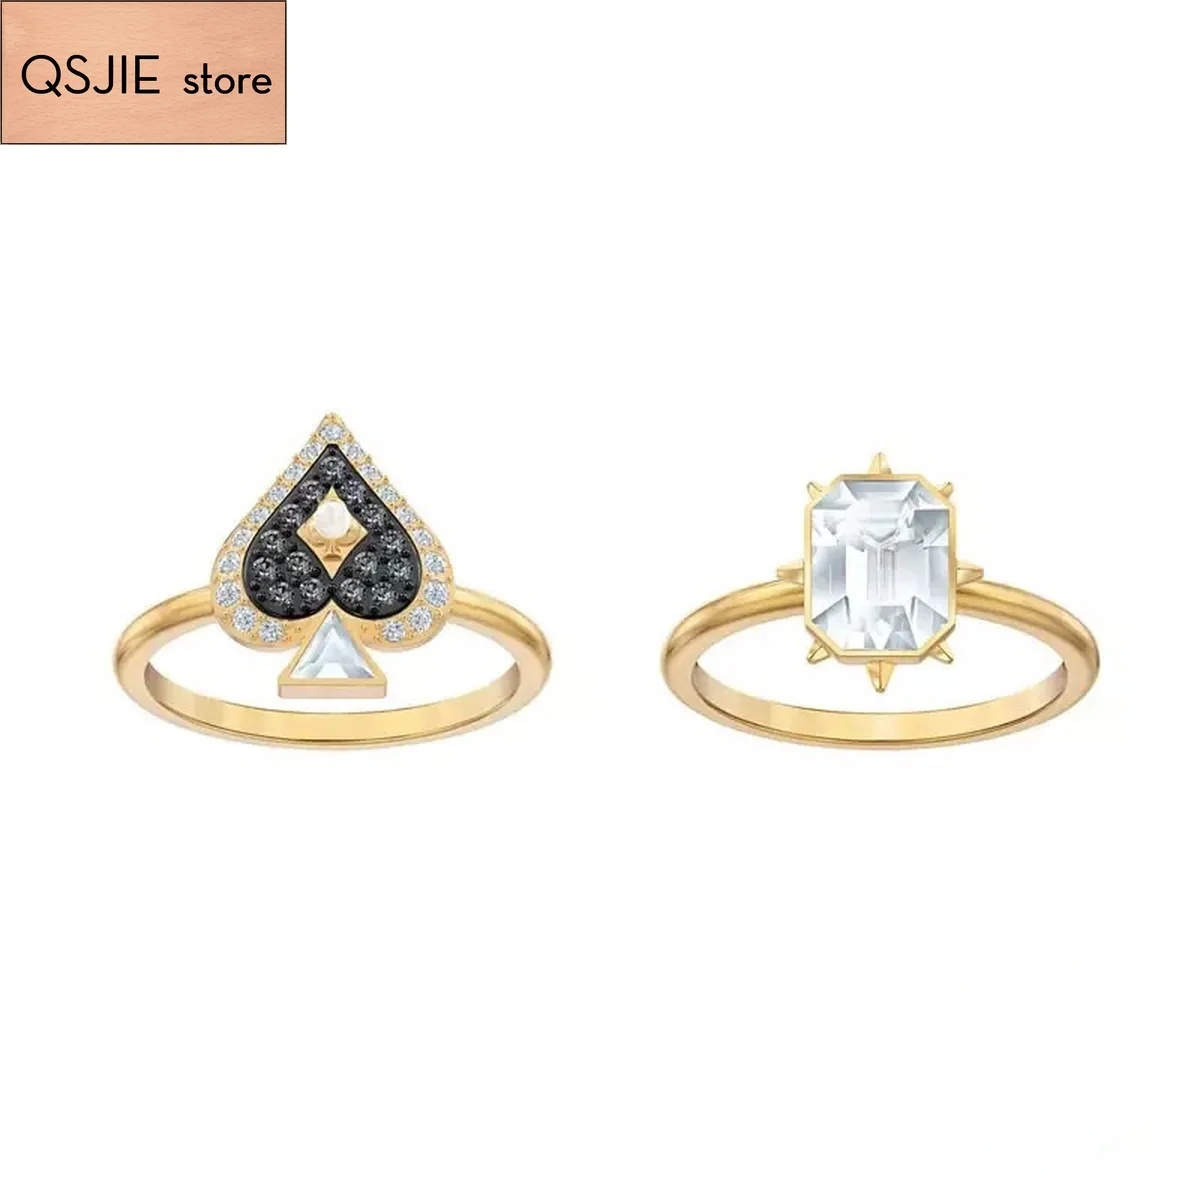 

QSJIE High quality SWA QUEEN CROWN Tarot magic black spider web crystal ring Charming fashion jewelry